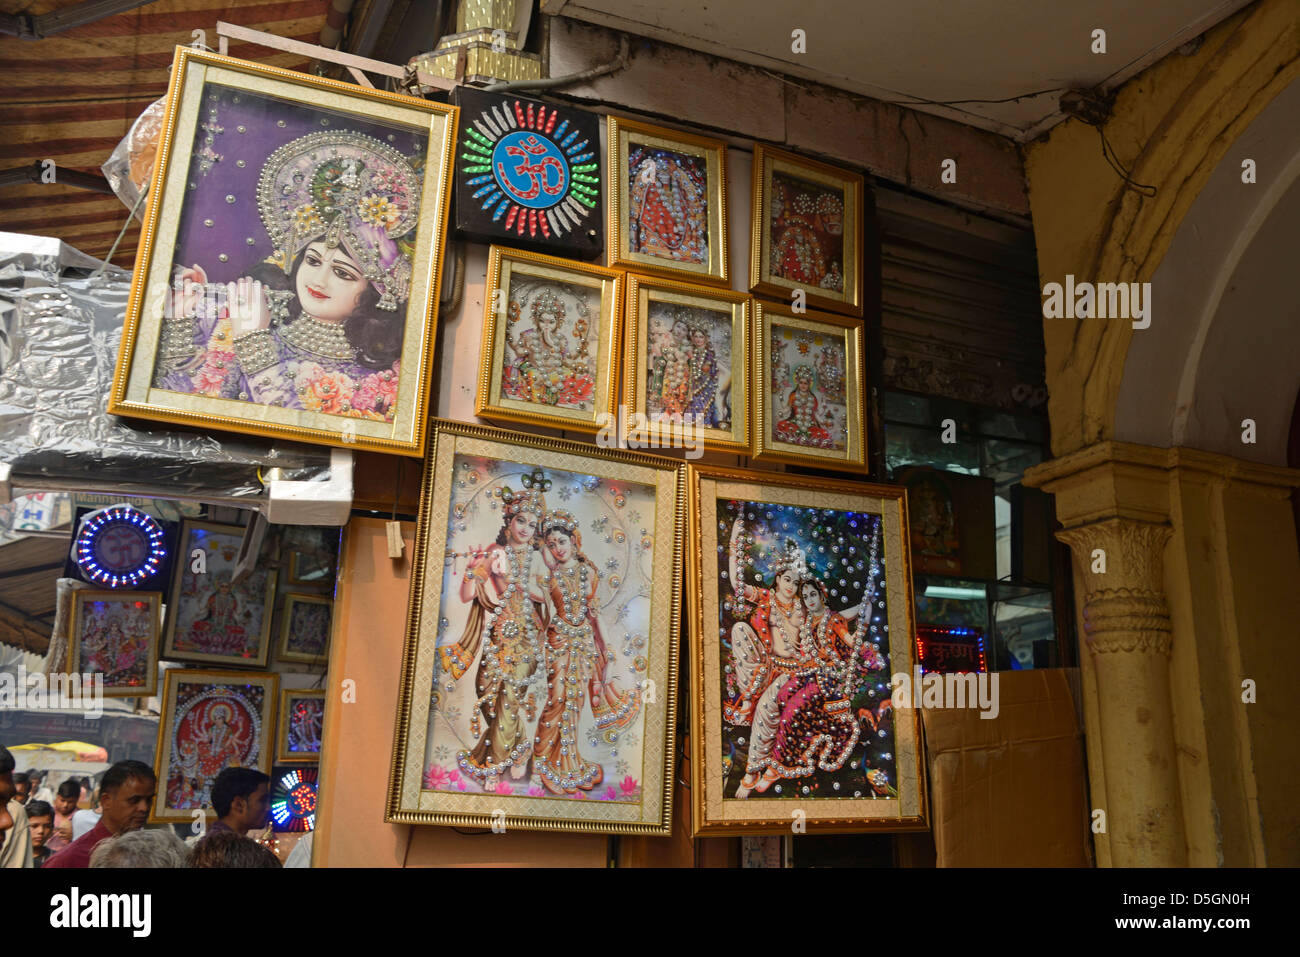 A Hindu gift shop in Chandni Chowk, Old Delhi, India Stock Photo